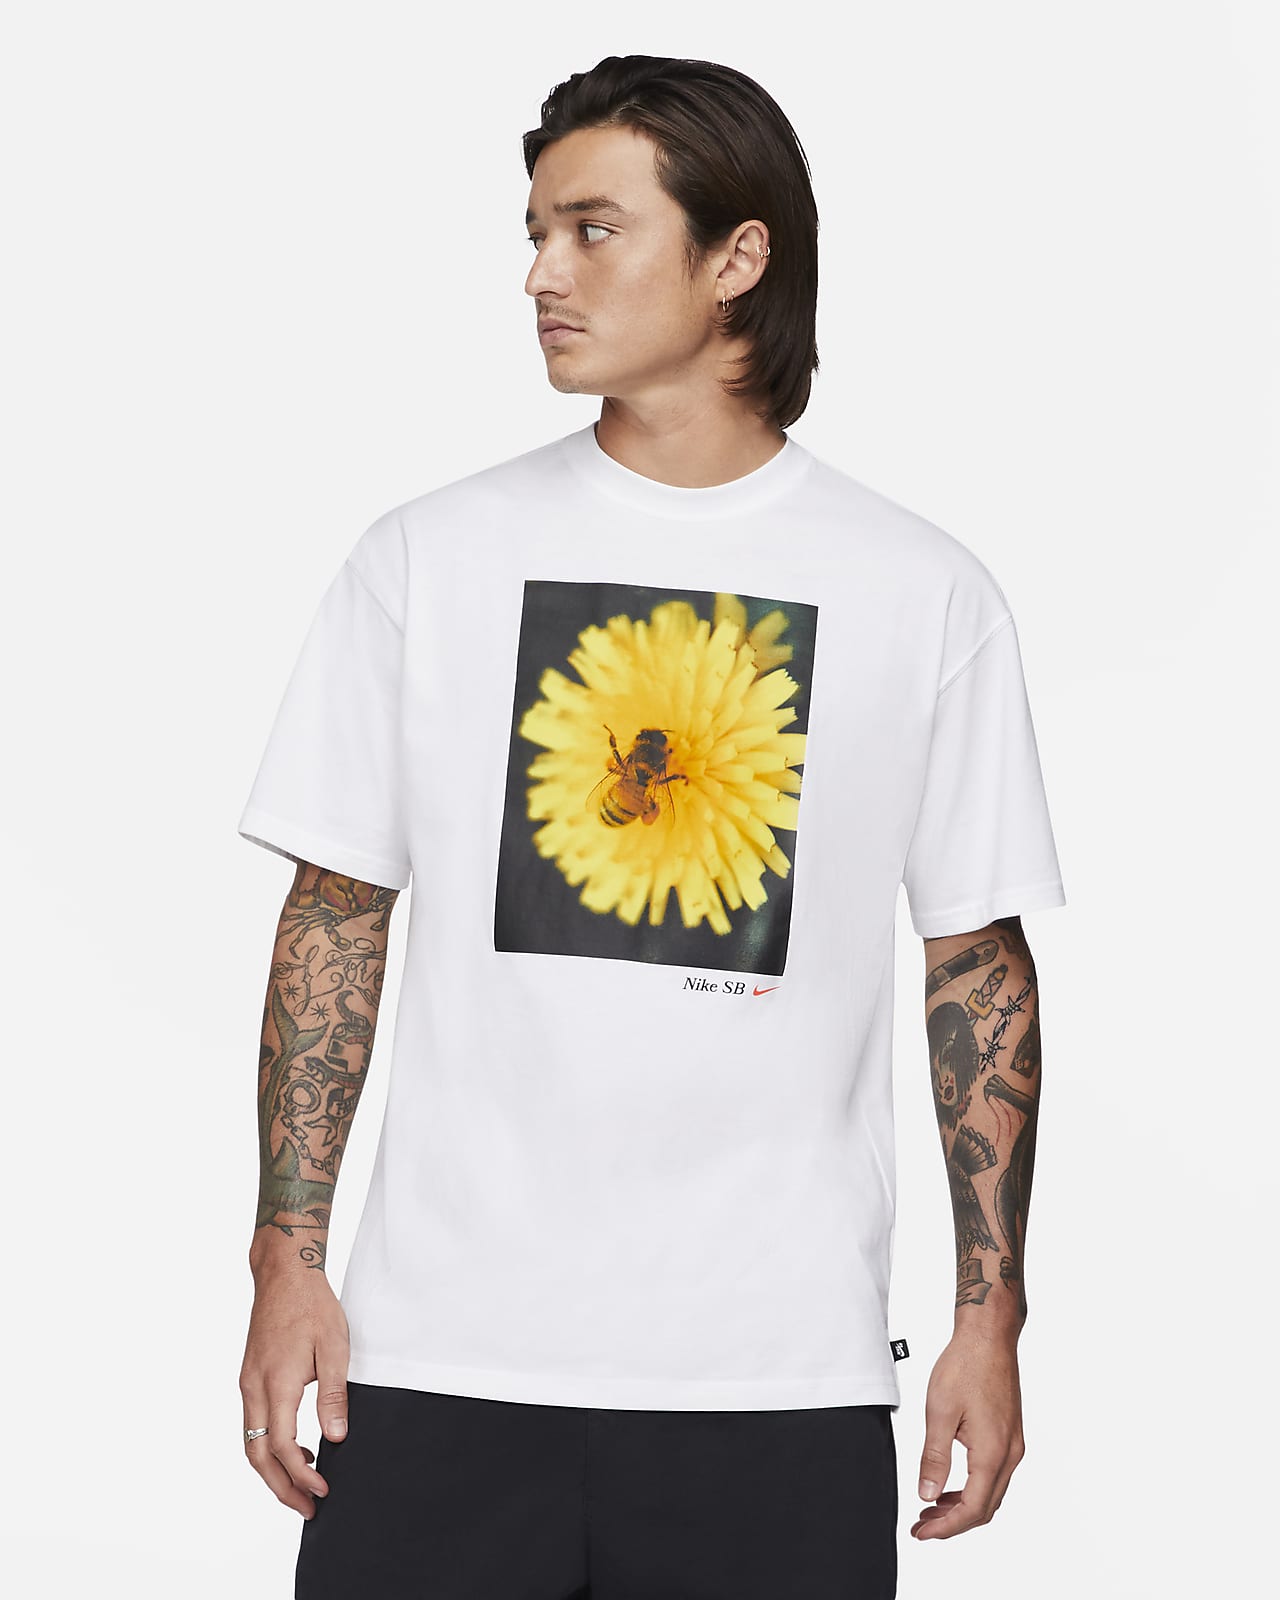 nike daisy t shirt